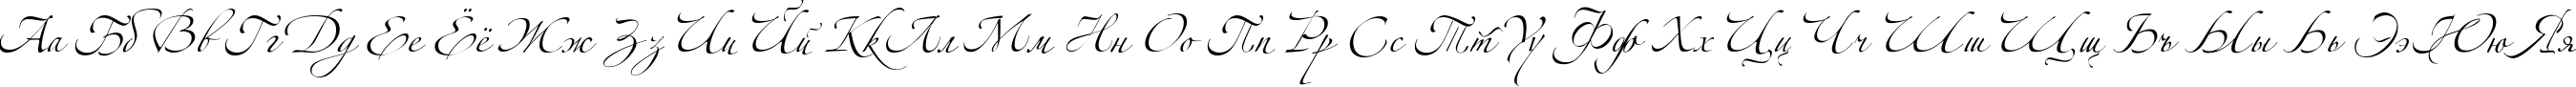 Пример написания русского алфавита шрифтом Alexandra Zeferino Three